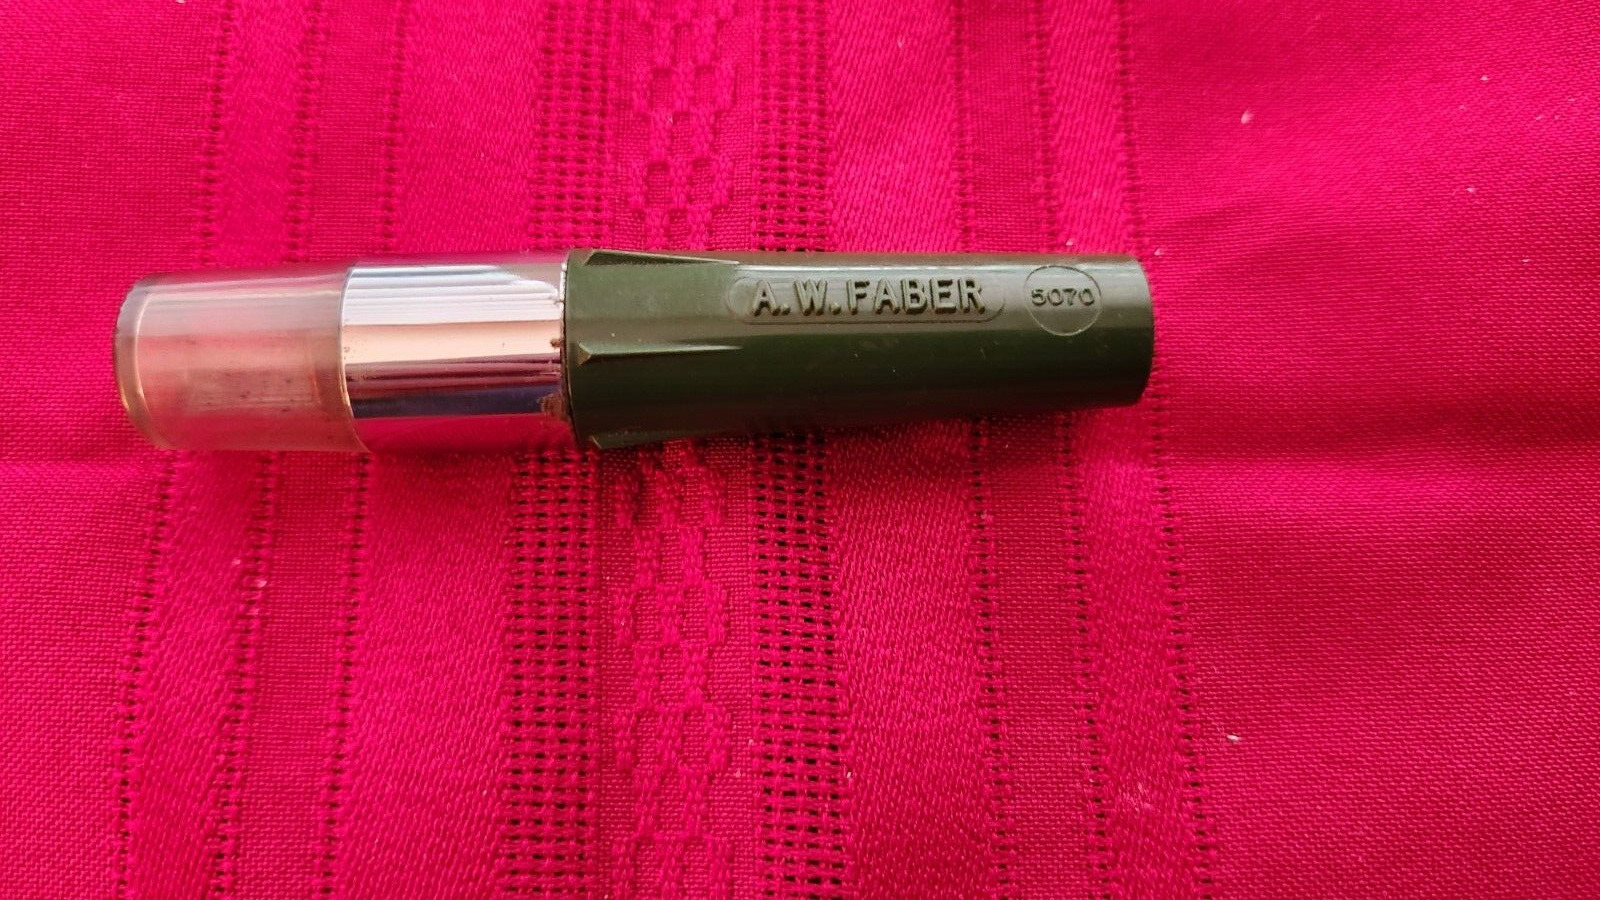 Vintage Farber Presion Point 5070 Pencil Sharpener